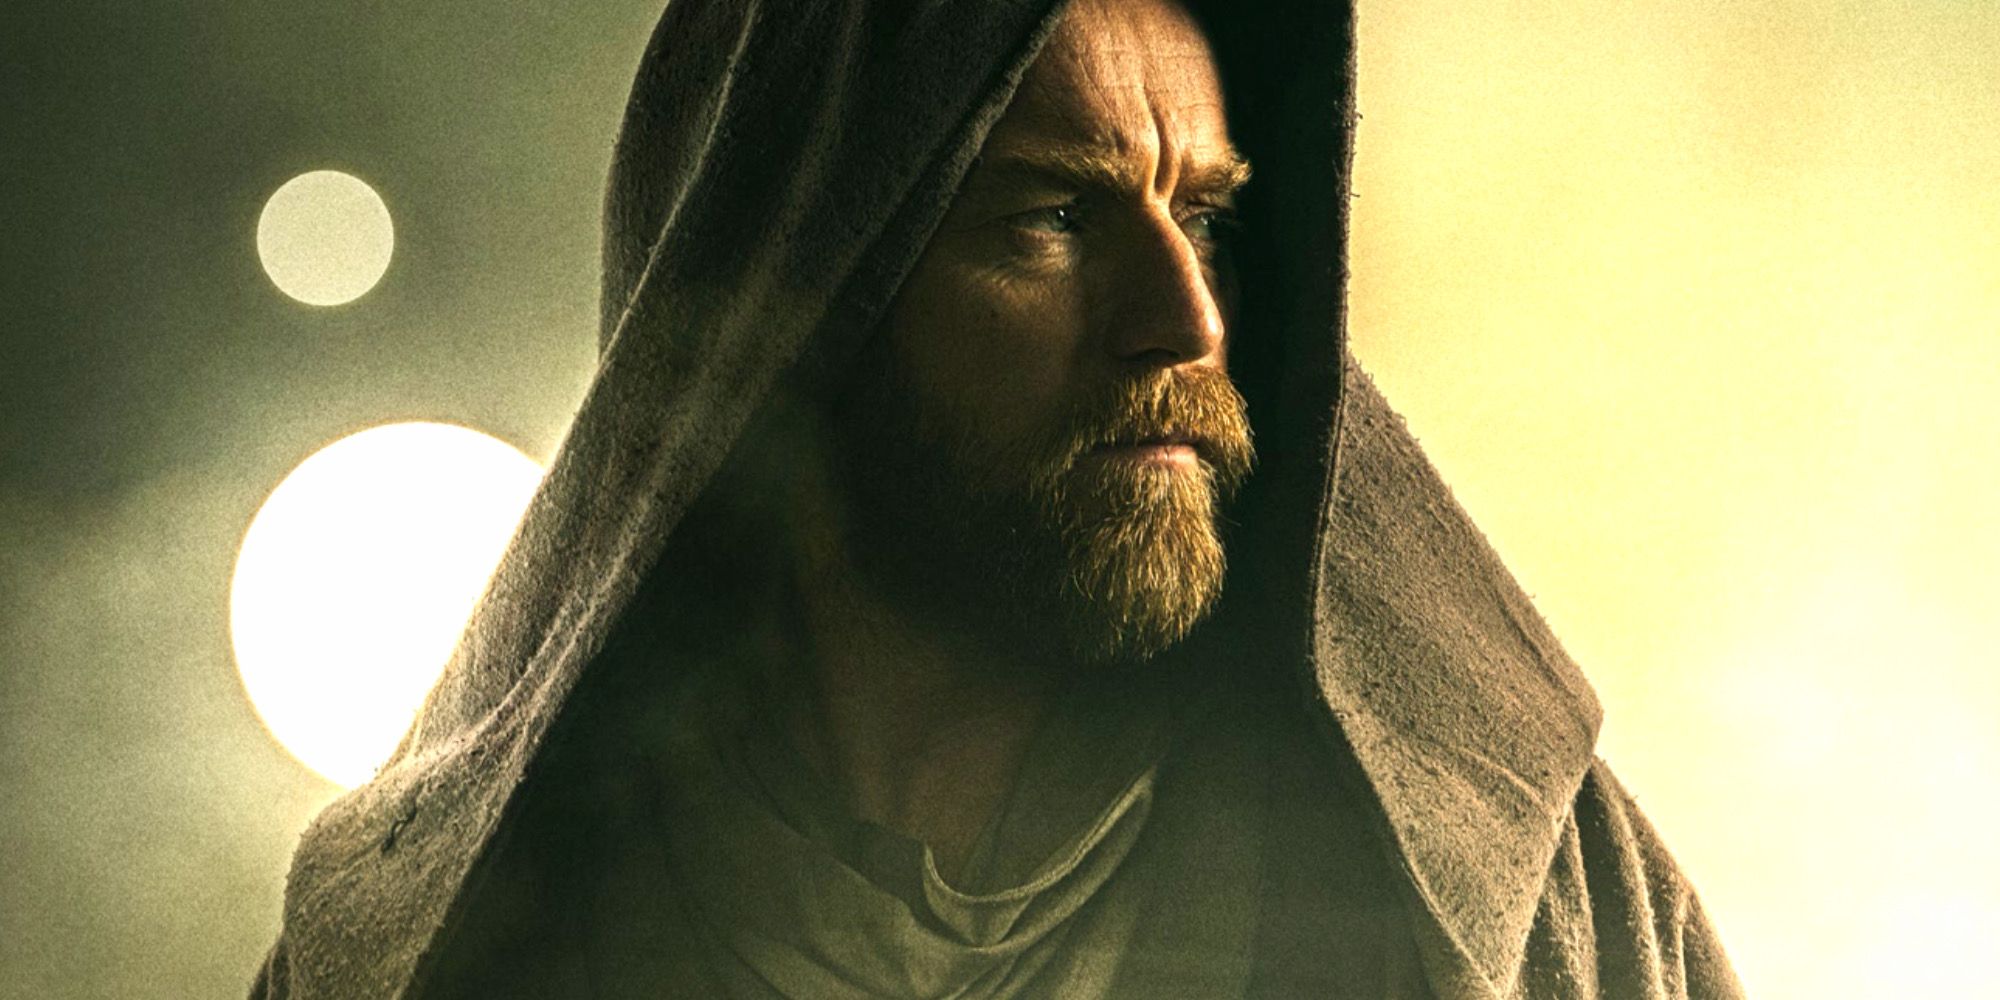 Obi Wan Kenobi In His Latest Poster